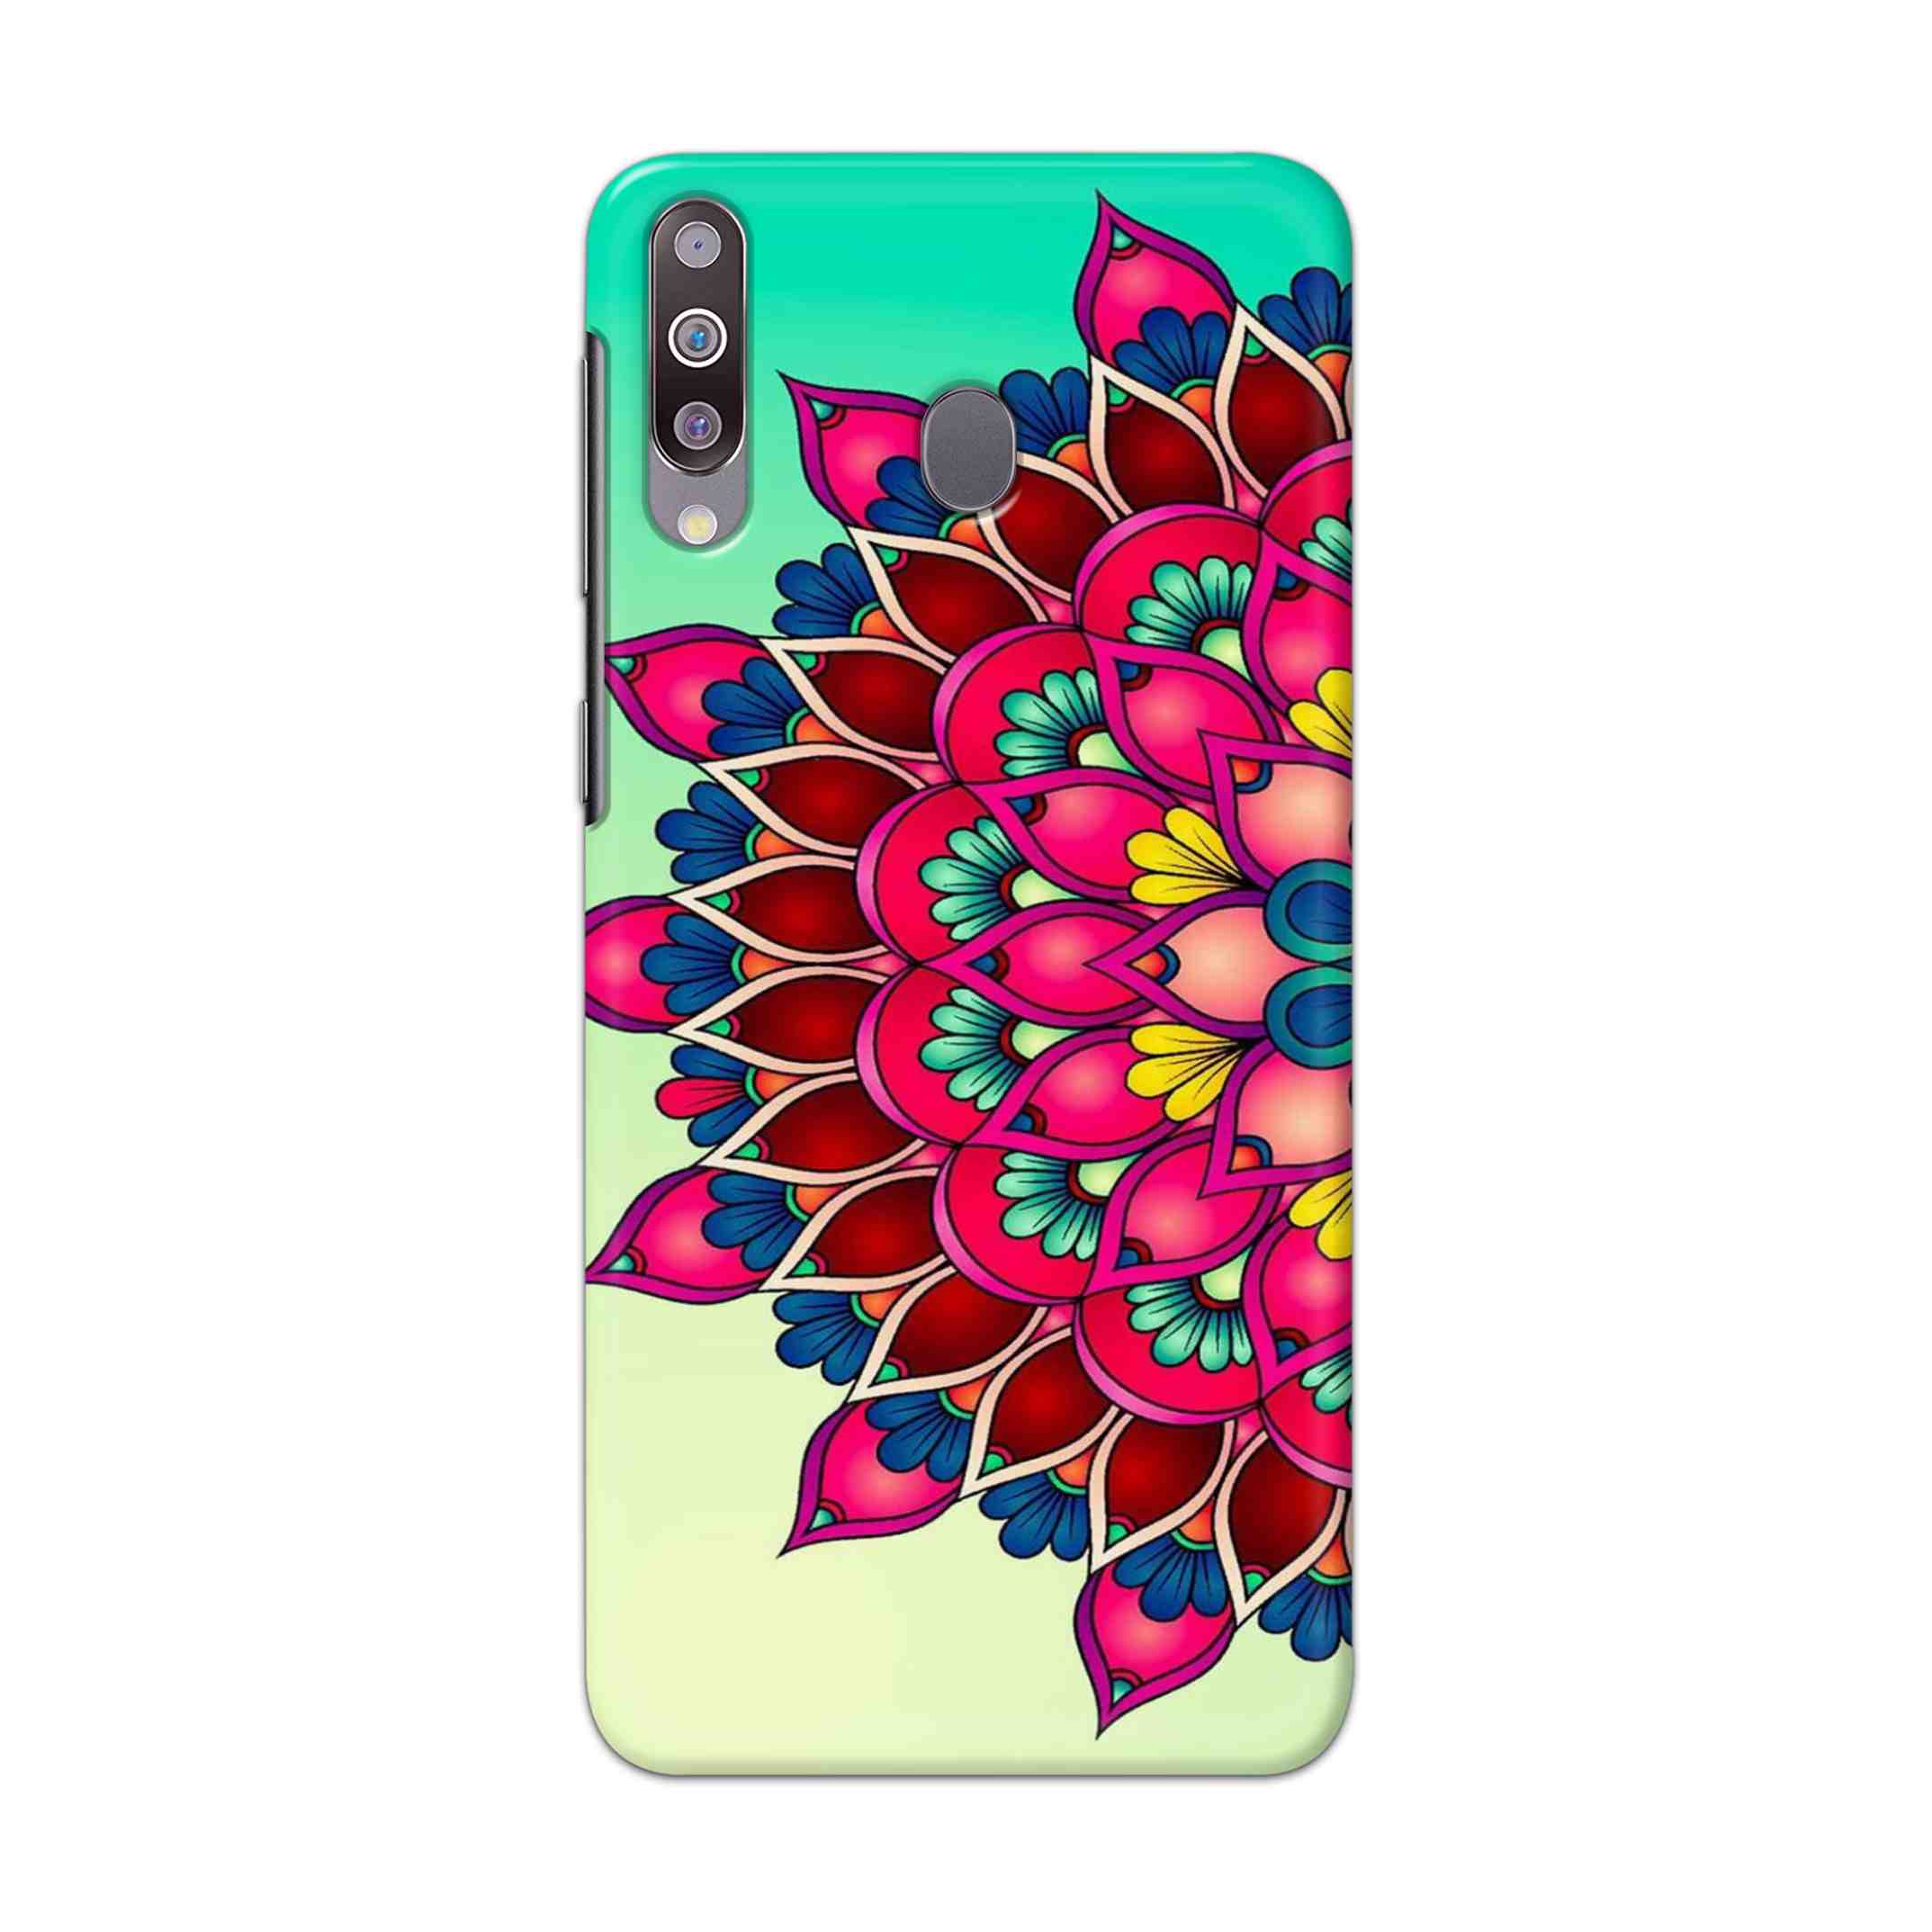 Buy Lotus Mandala Hard Back Mobile Phone Case Cover For Samsung Galaxy M30 Online